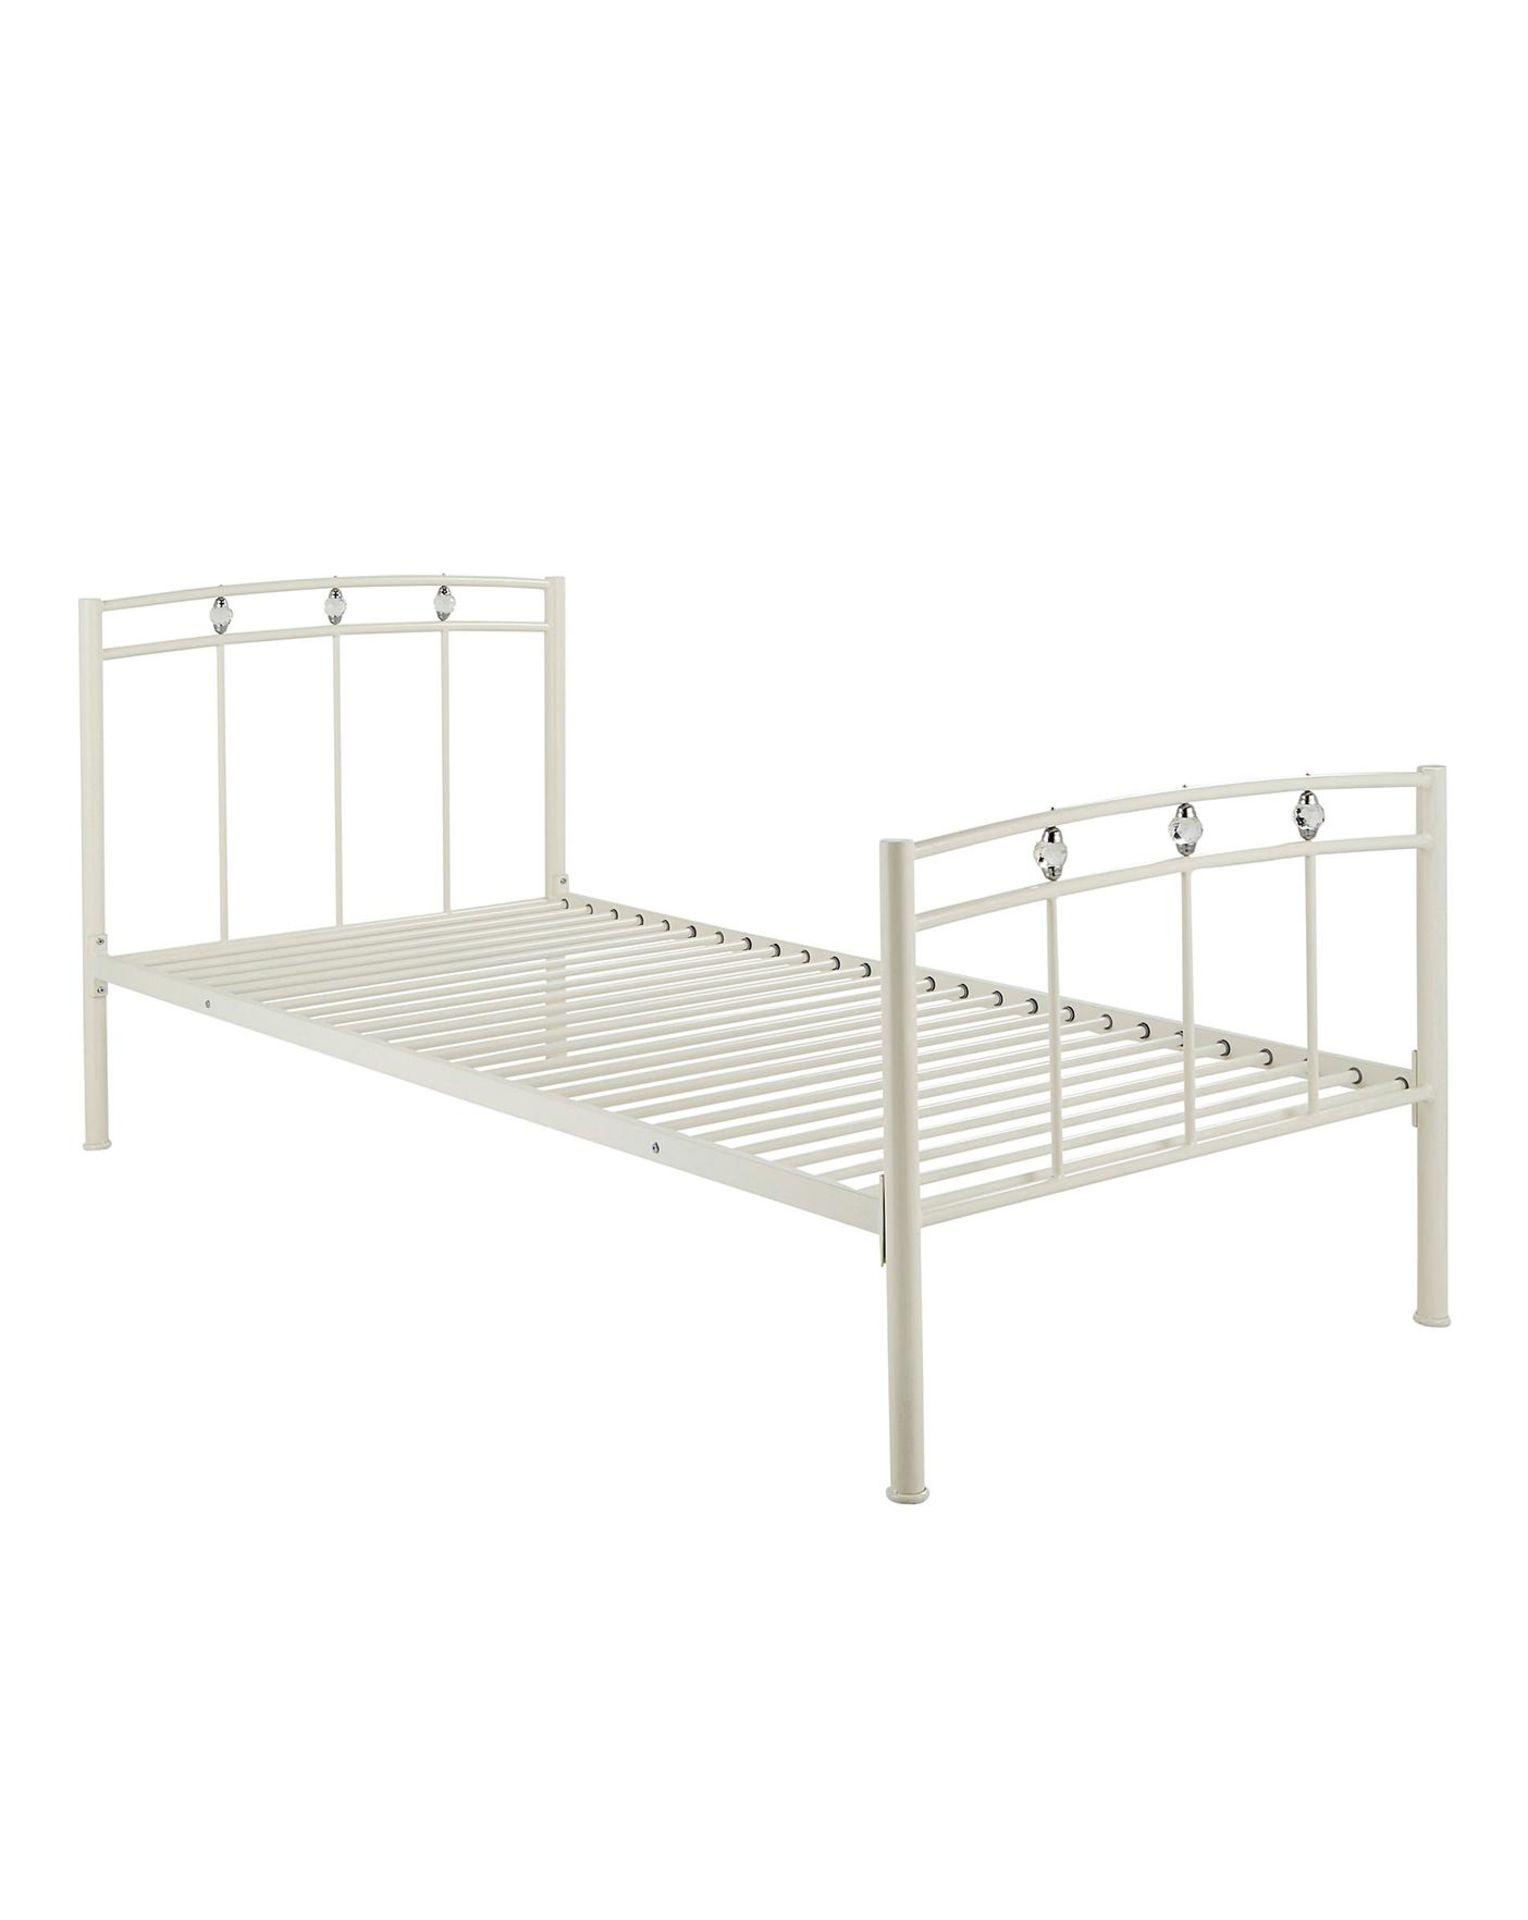 NEW & BOXED ELIANA Metal SINGLE Bed Frame. WHITE. RRP £169 EACH. The Eliana Metal bed frame, is a